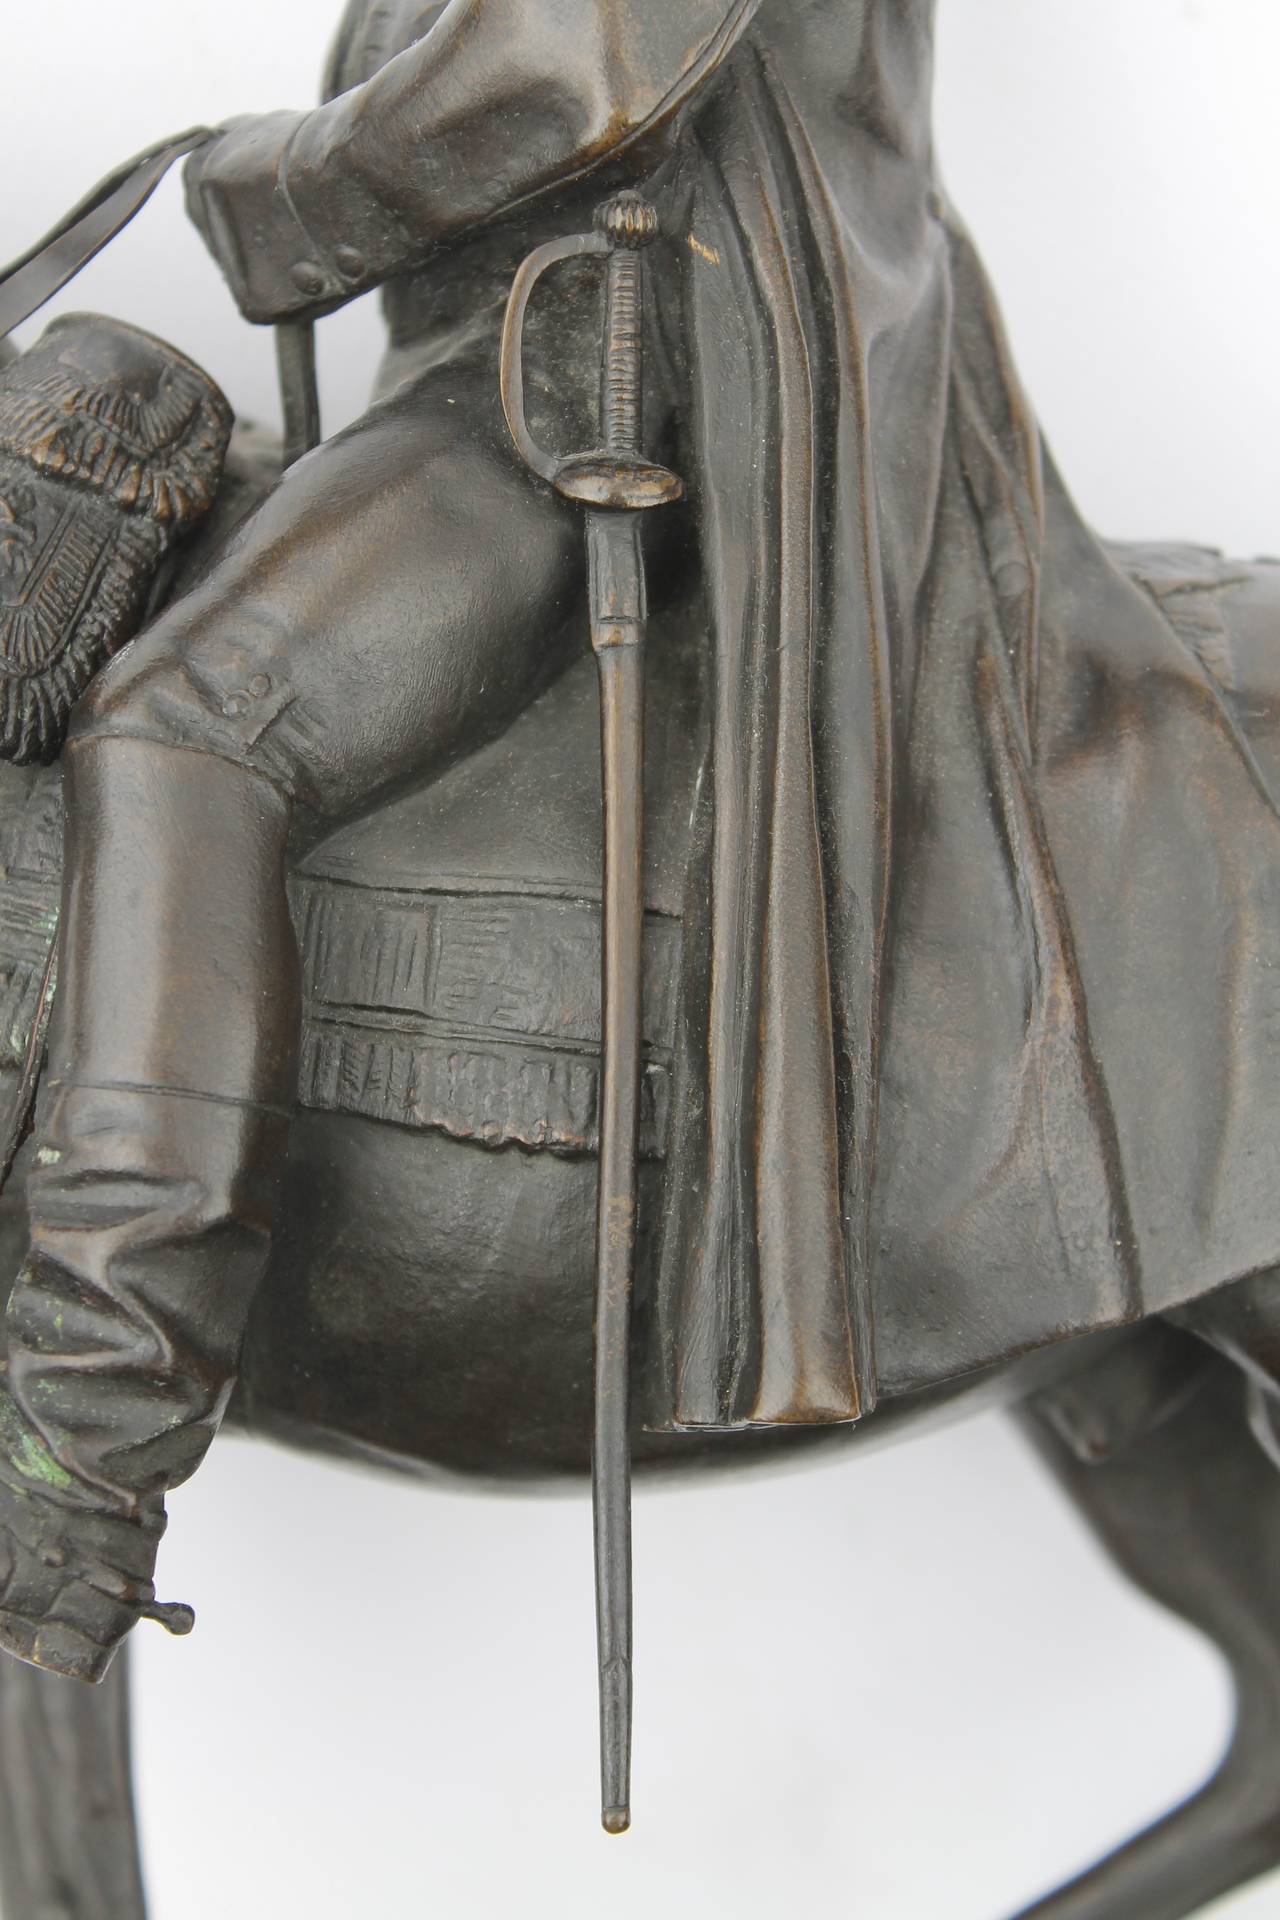 napoleon on horseback statue